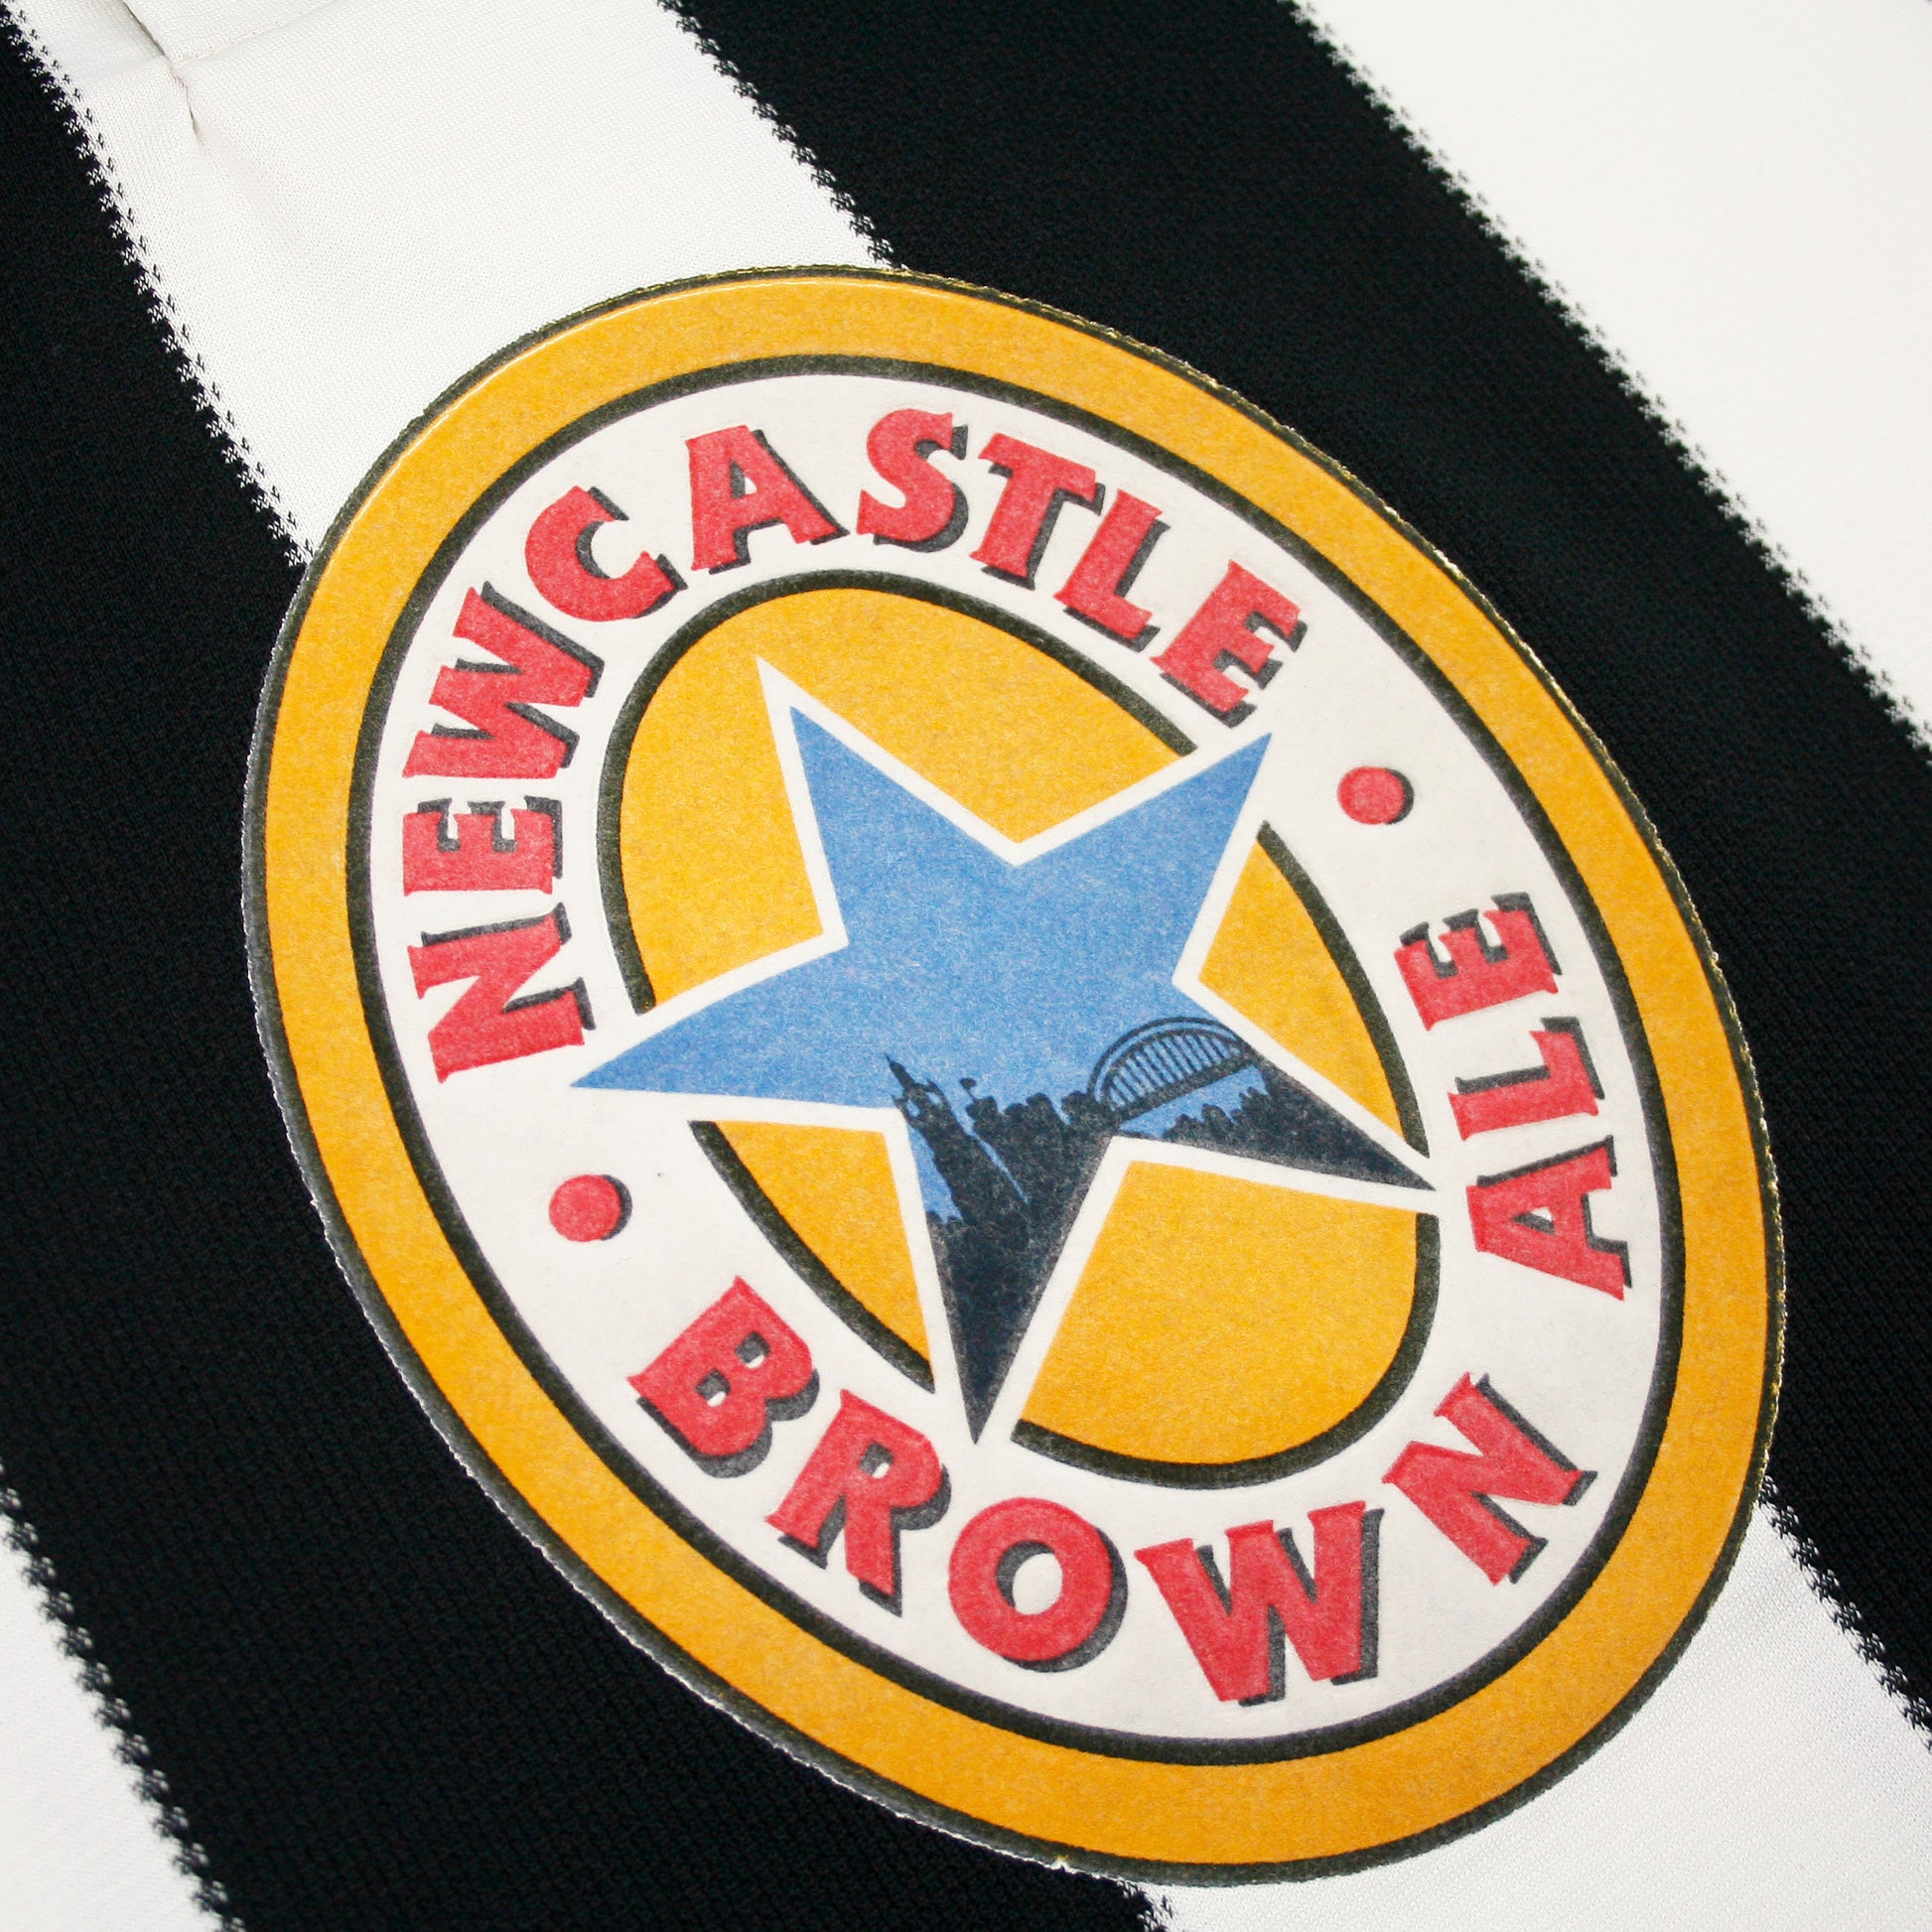 Retro Newcastle United Home Football Shirt 95/97 - SoccerLord